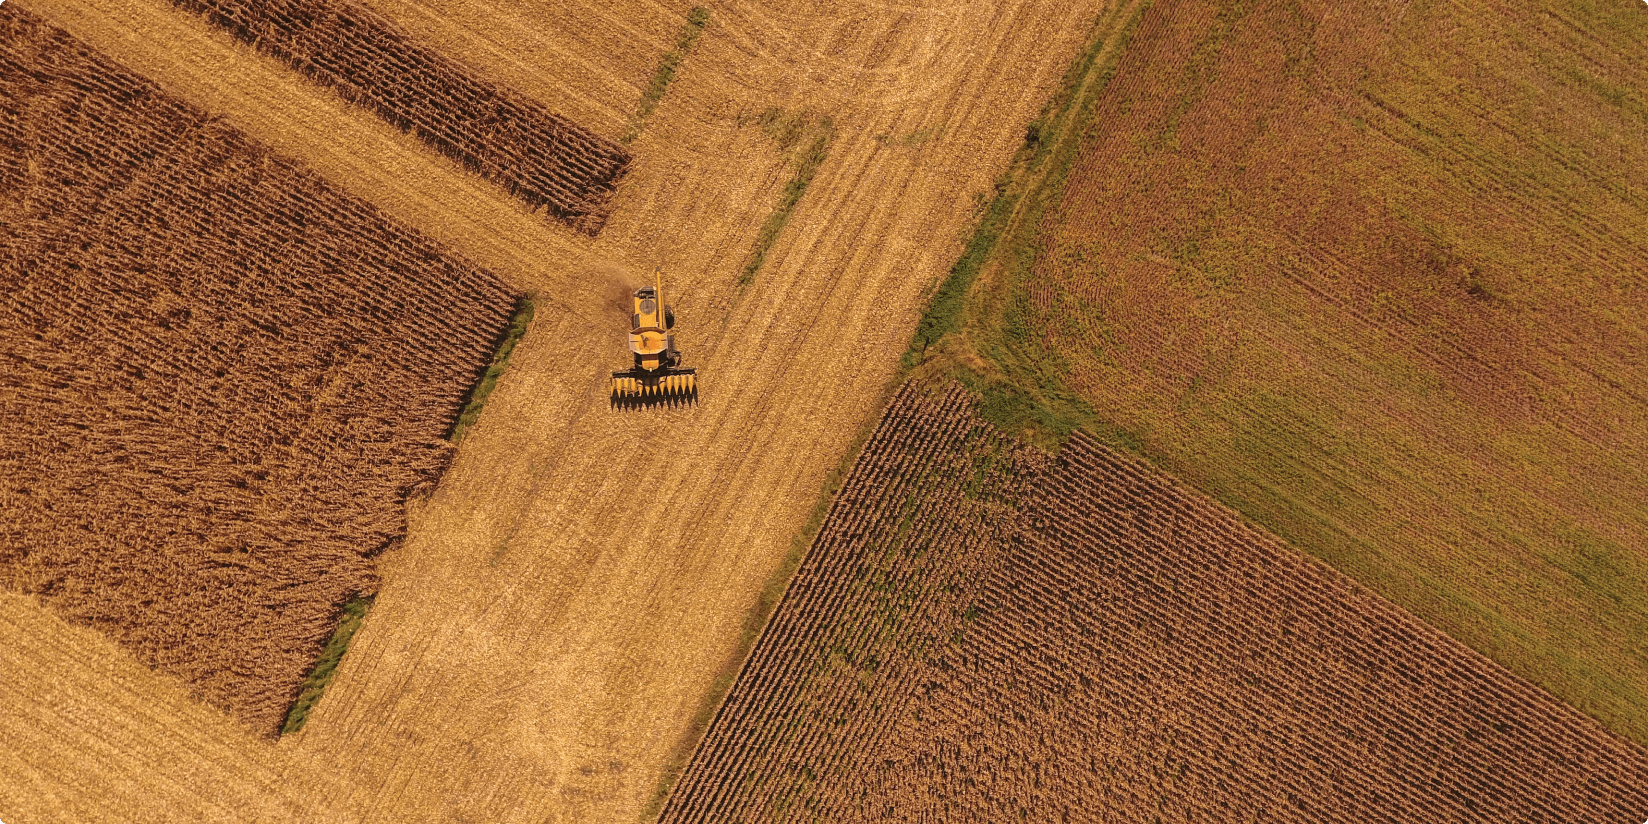 Crop Field